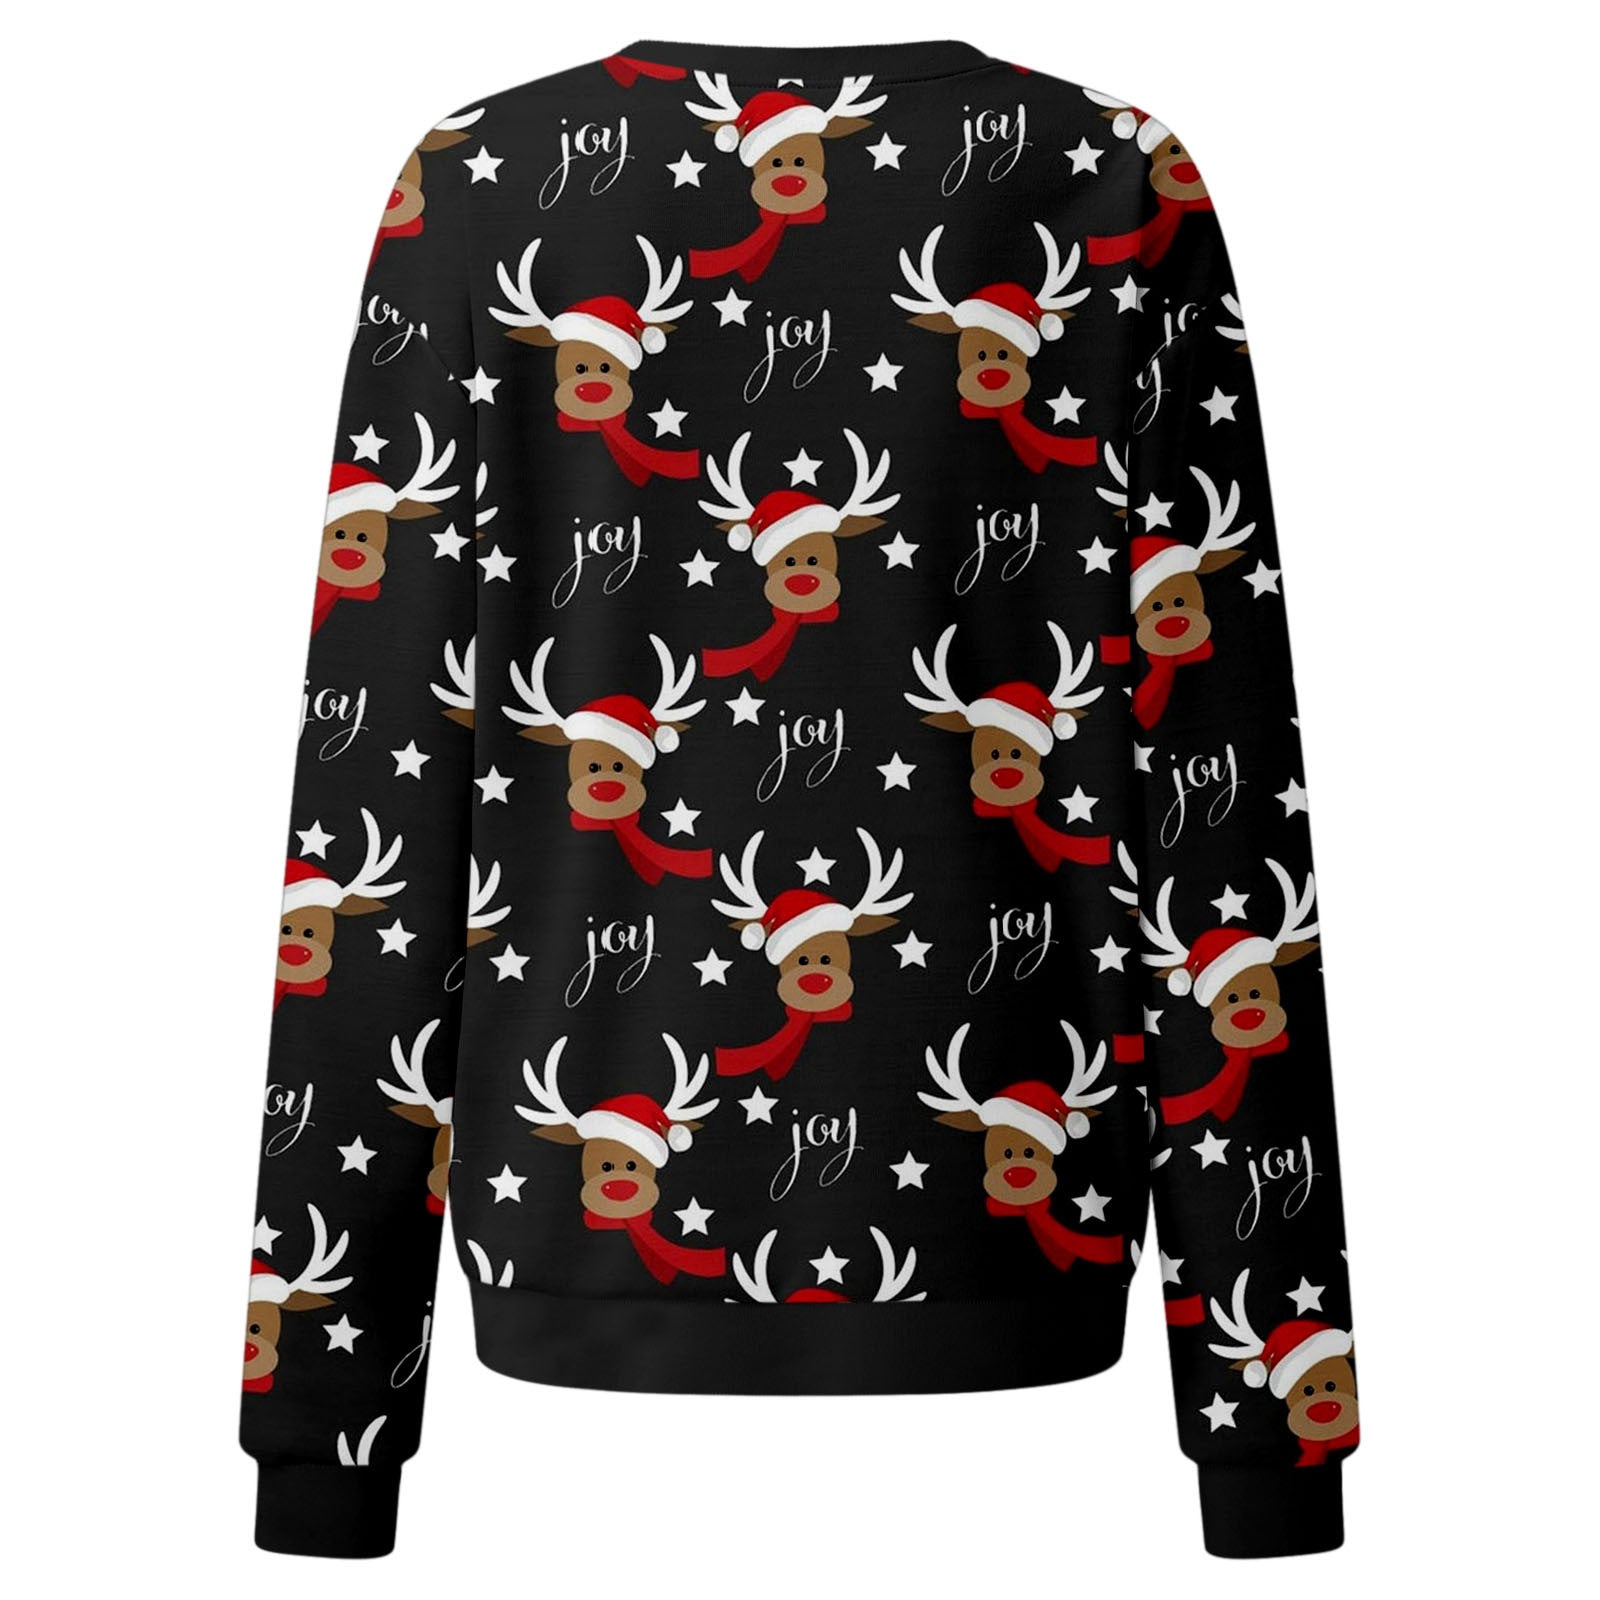 European and American style women's printed elk Christmas sweater